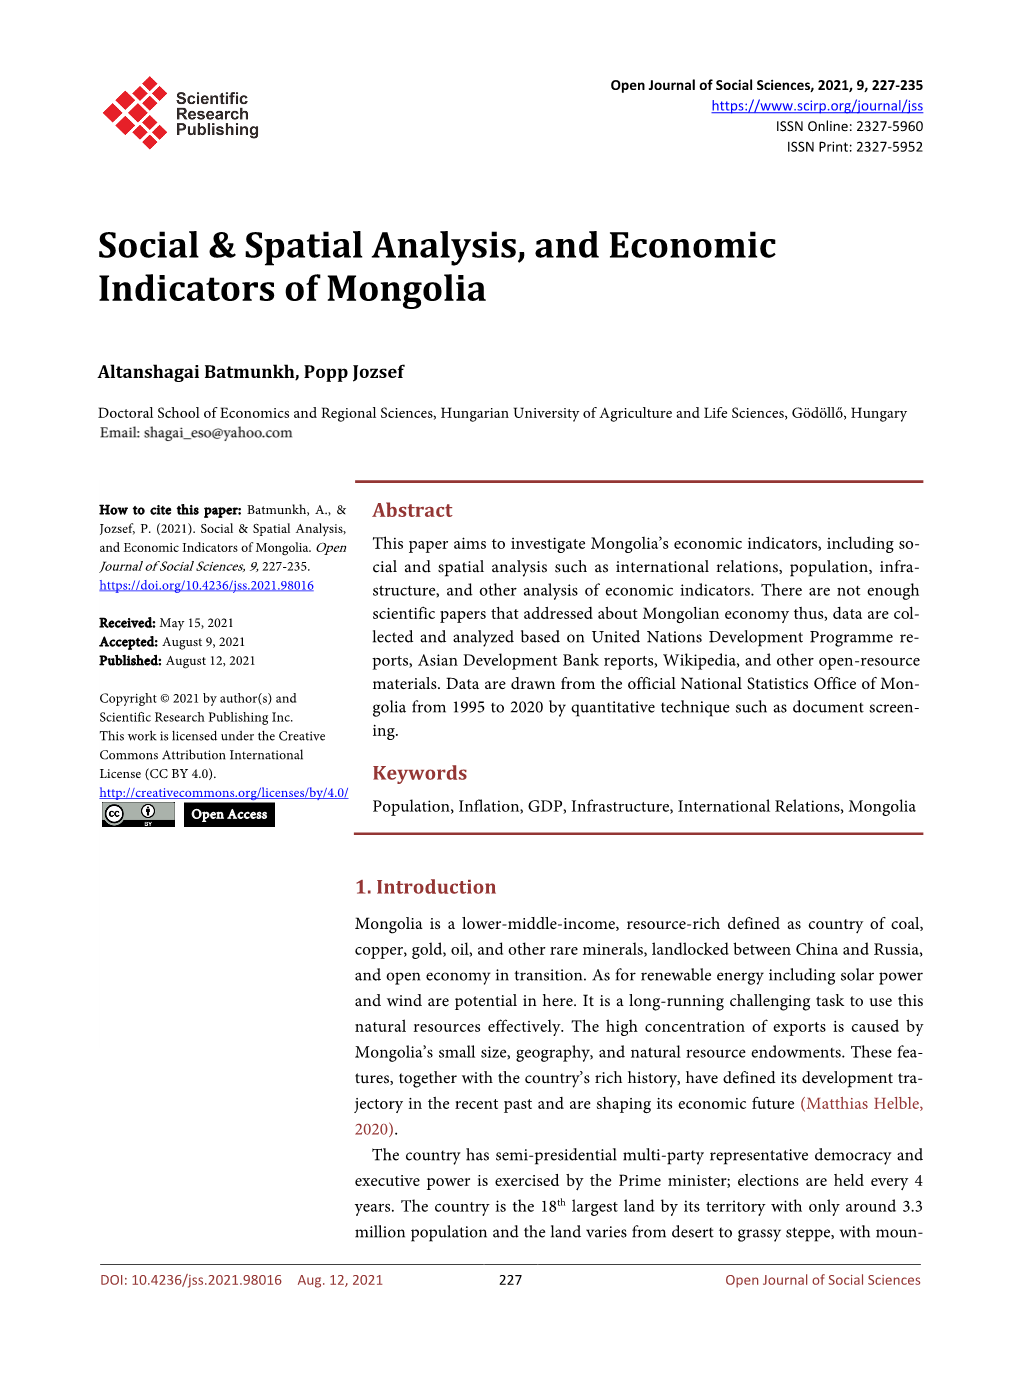 Social & Spatial Analysis, and Economic Indicators of Mongolia